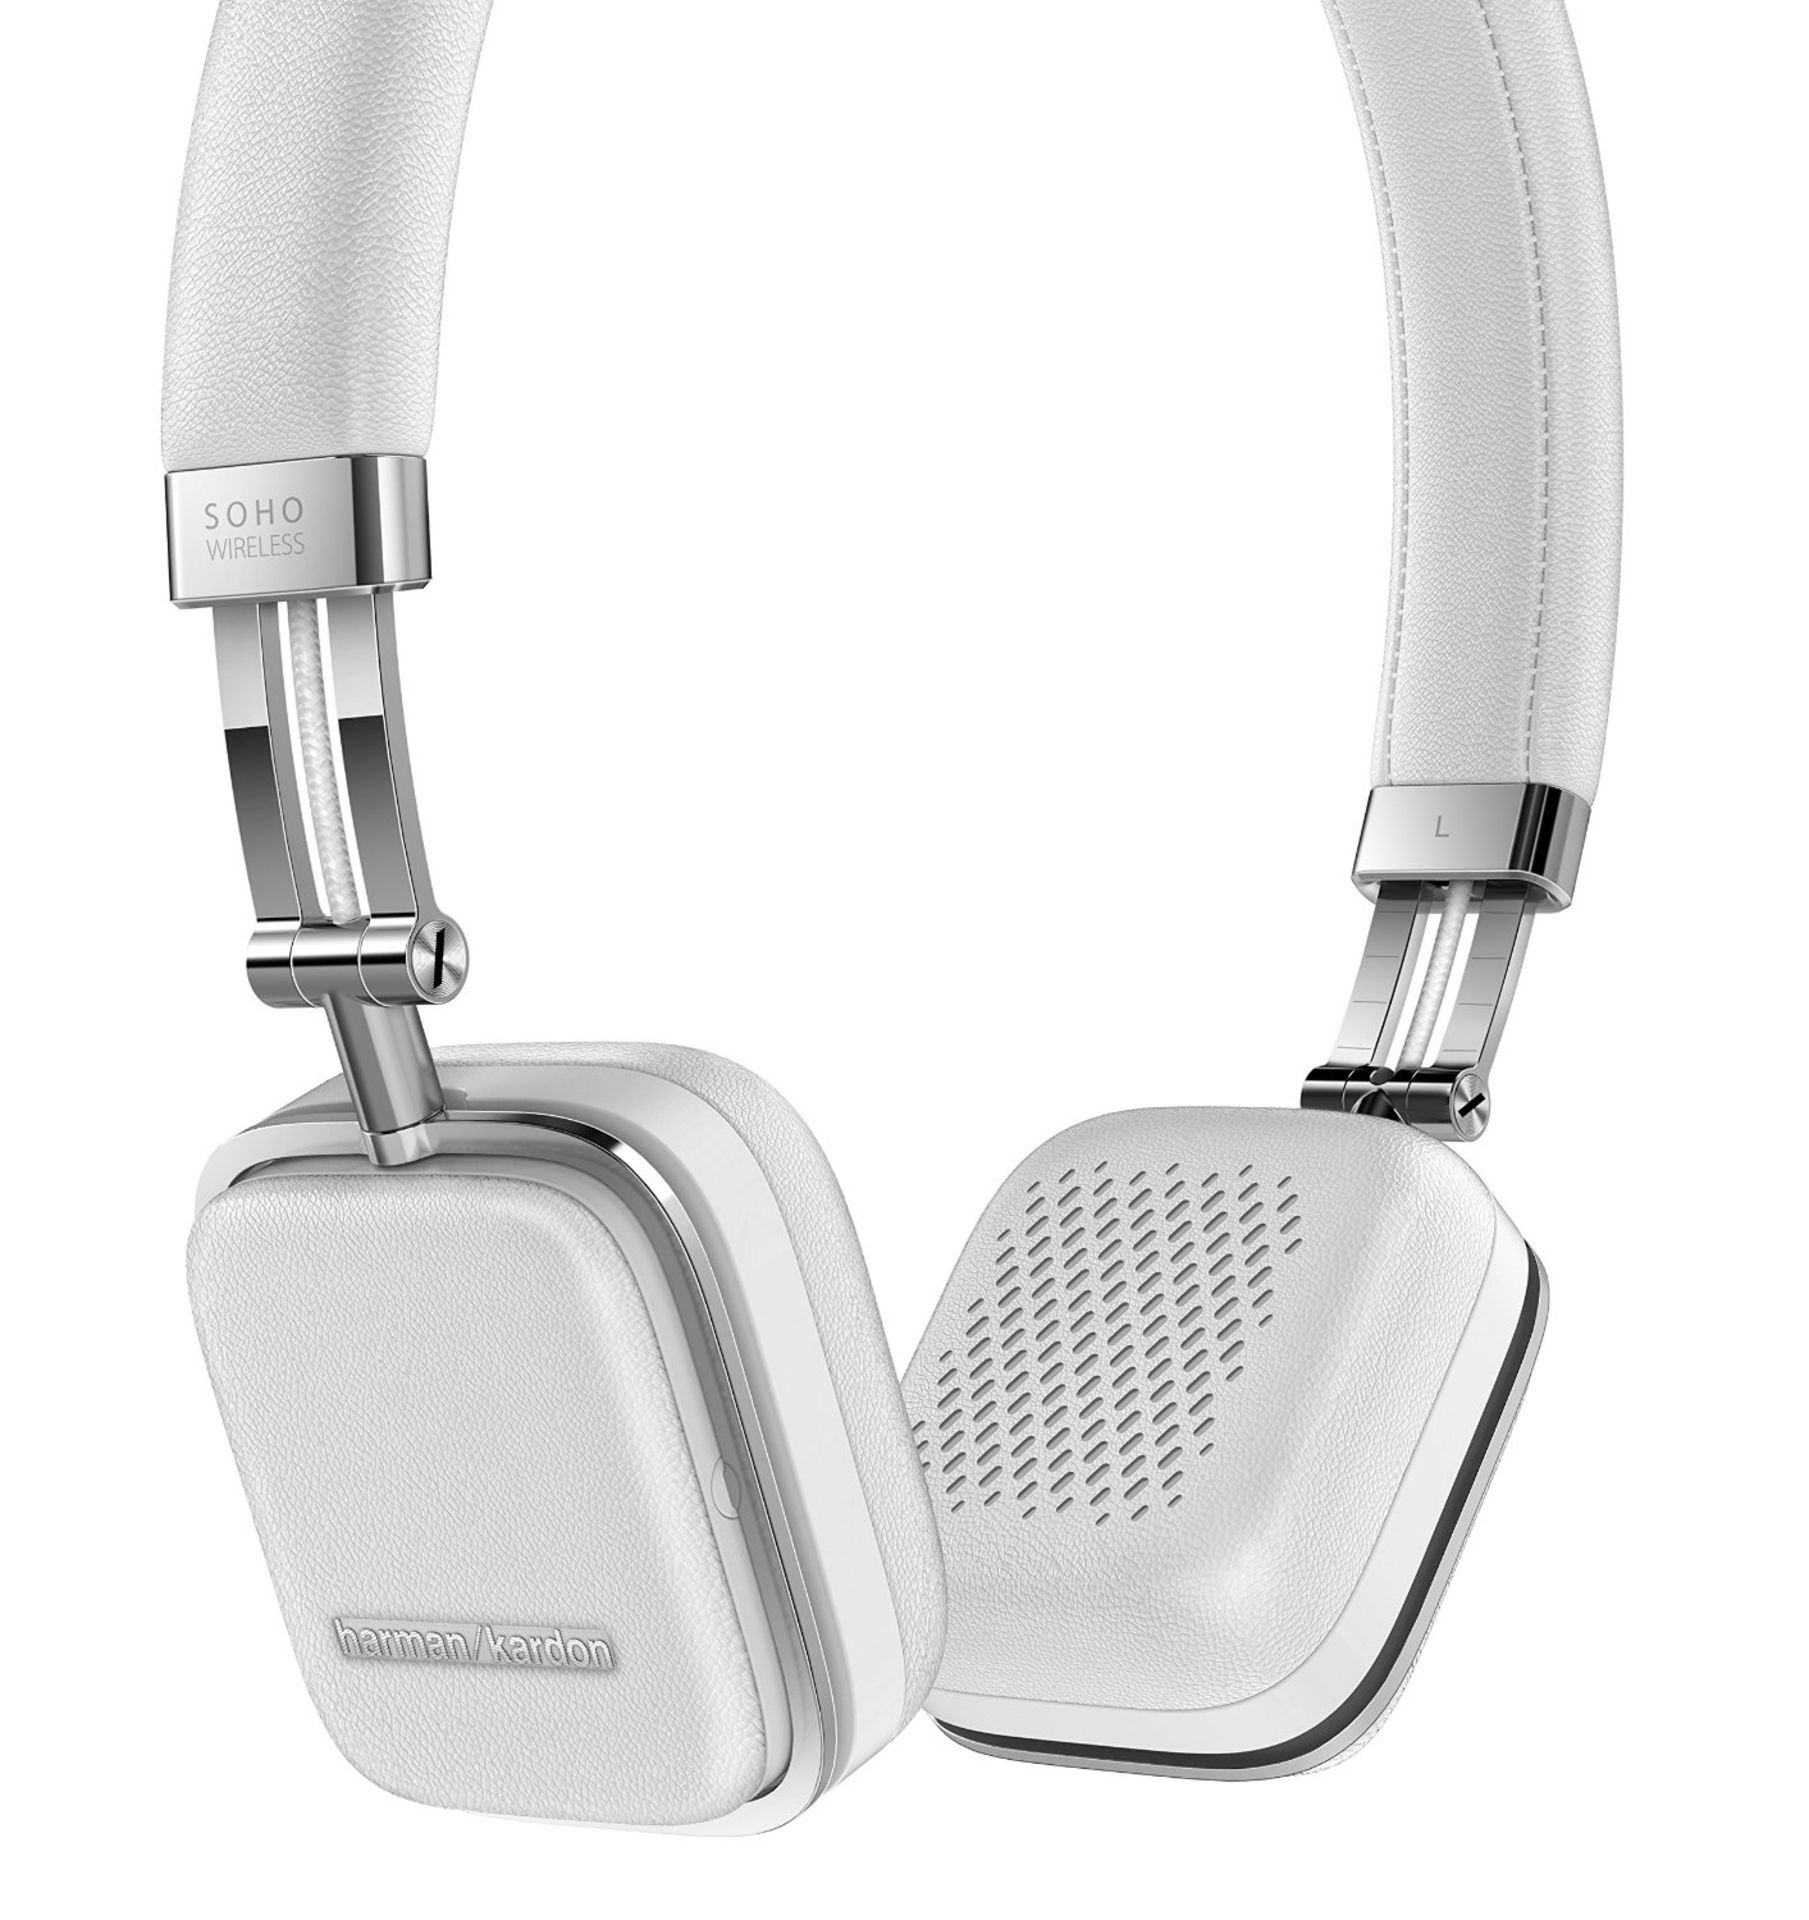 V Brand New Harman Kardon Soho On Ear Wireless Headphones In White RRP:£249.99 Amazon Price £229.99 - Image 2 of 2